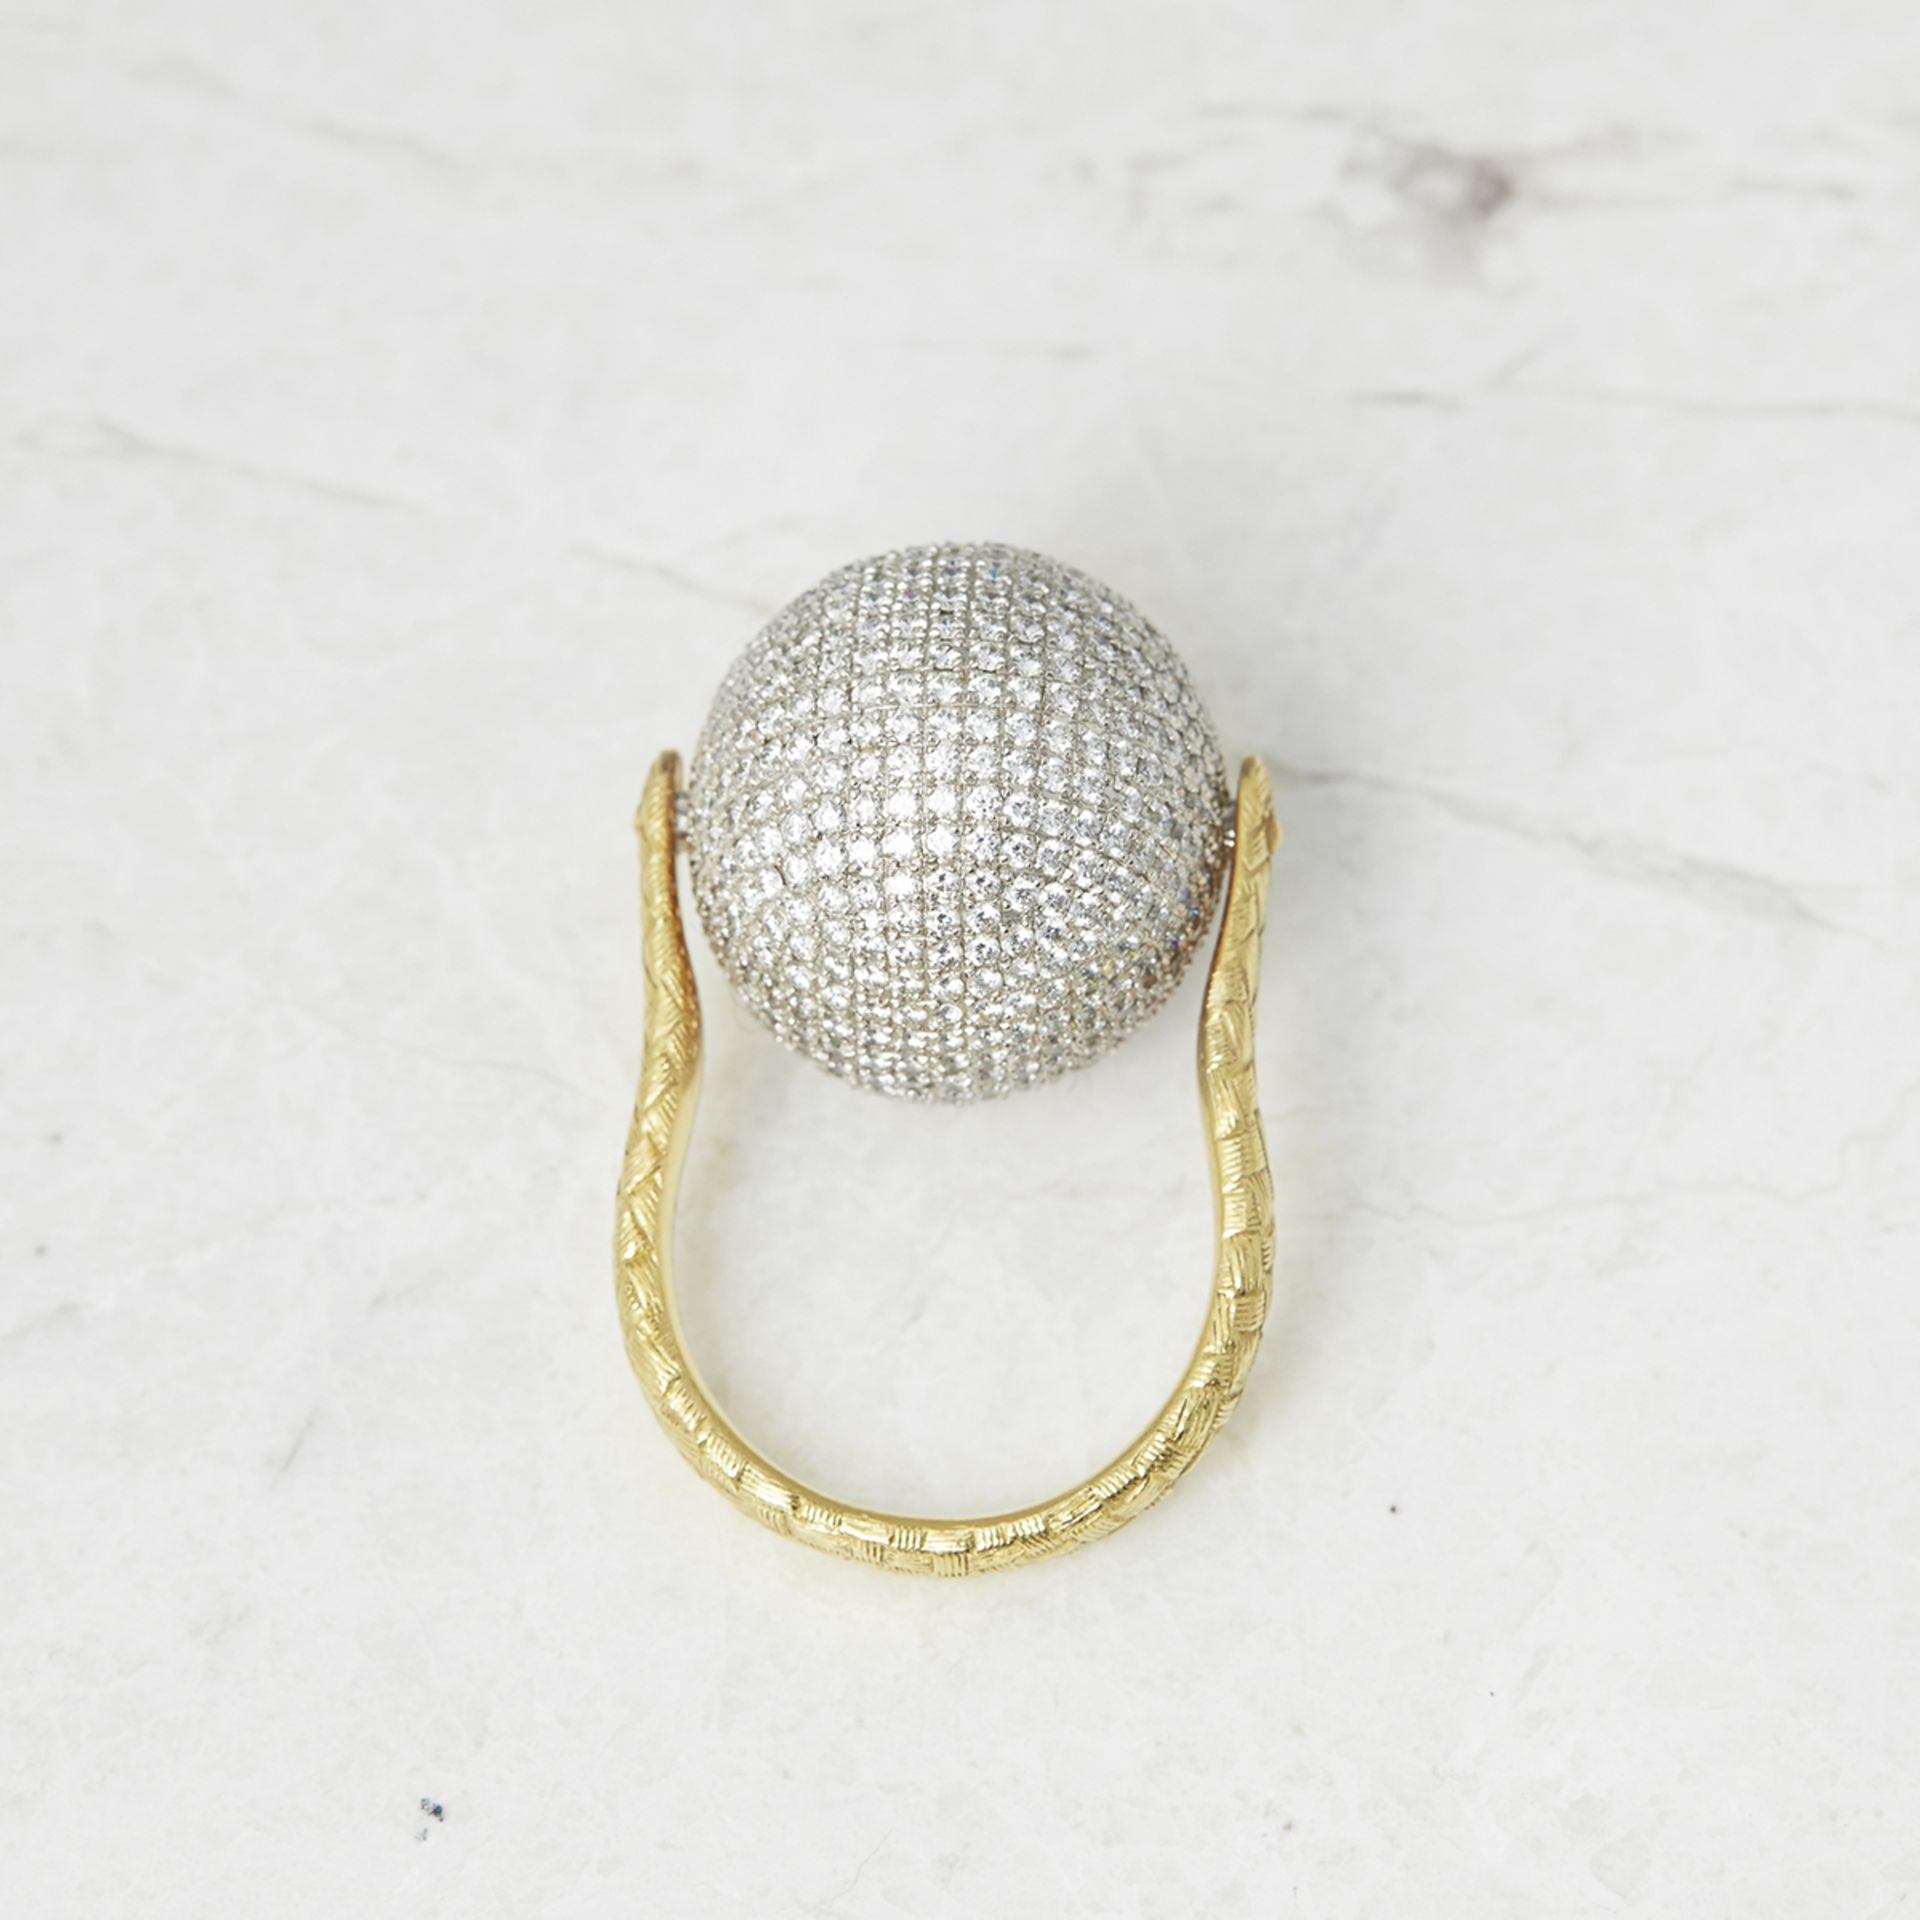 Bottega Veneta 18k Yellow & White Gold Diamond Necklace, Earrings & Ring Sfera Suite - Box & Certs - Image 20 of 21